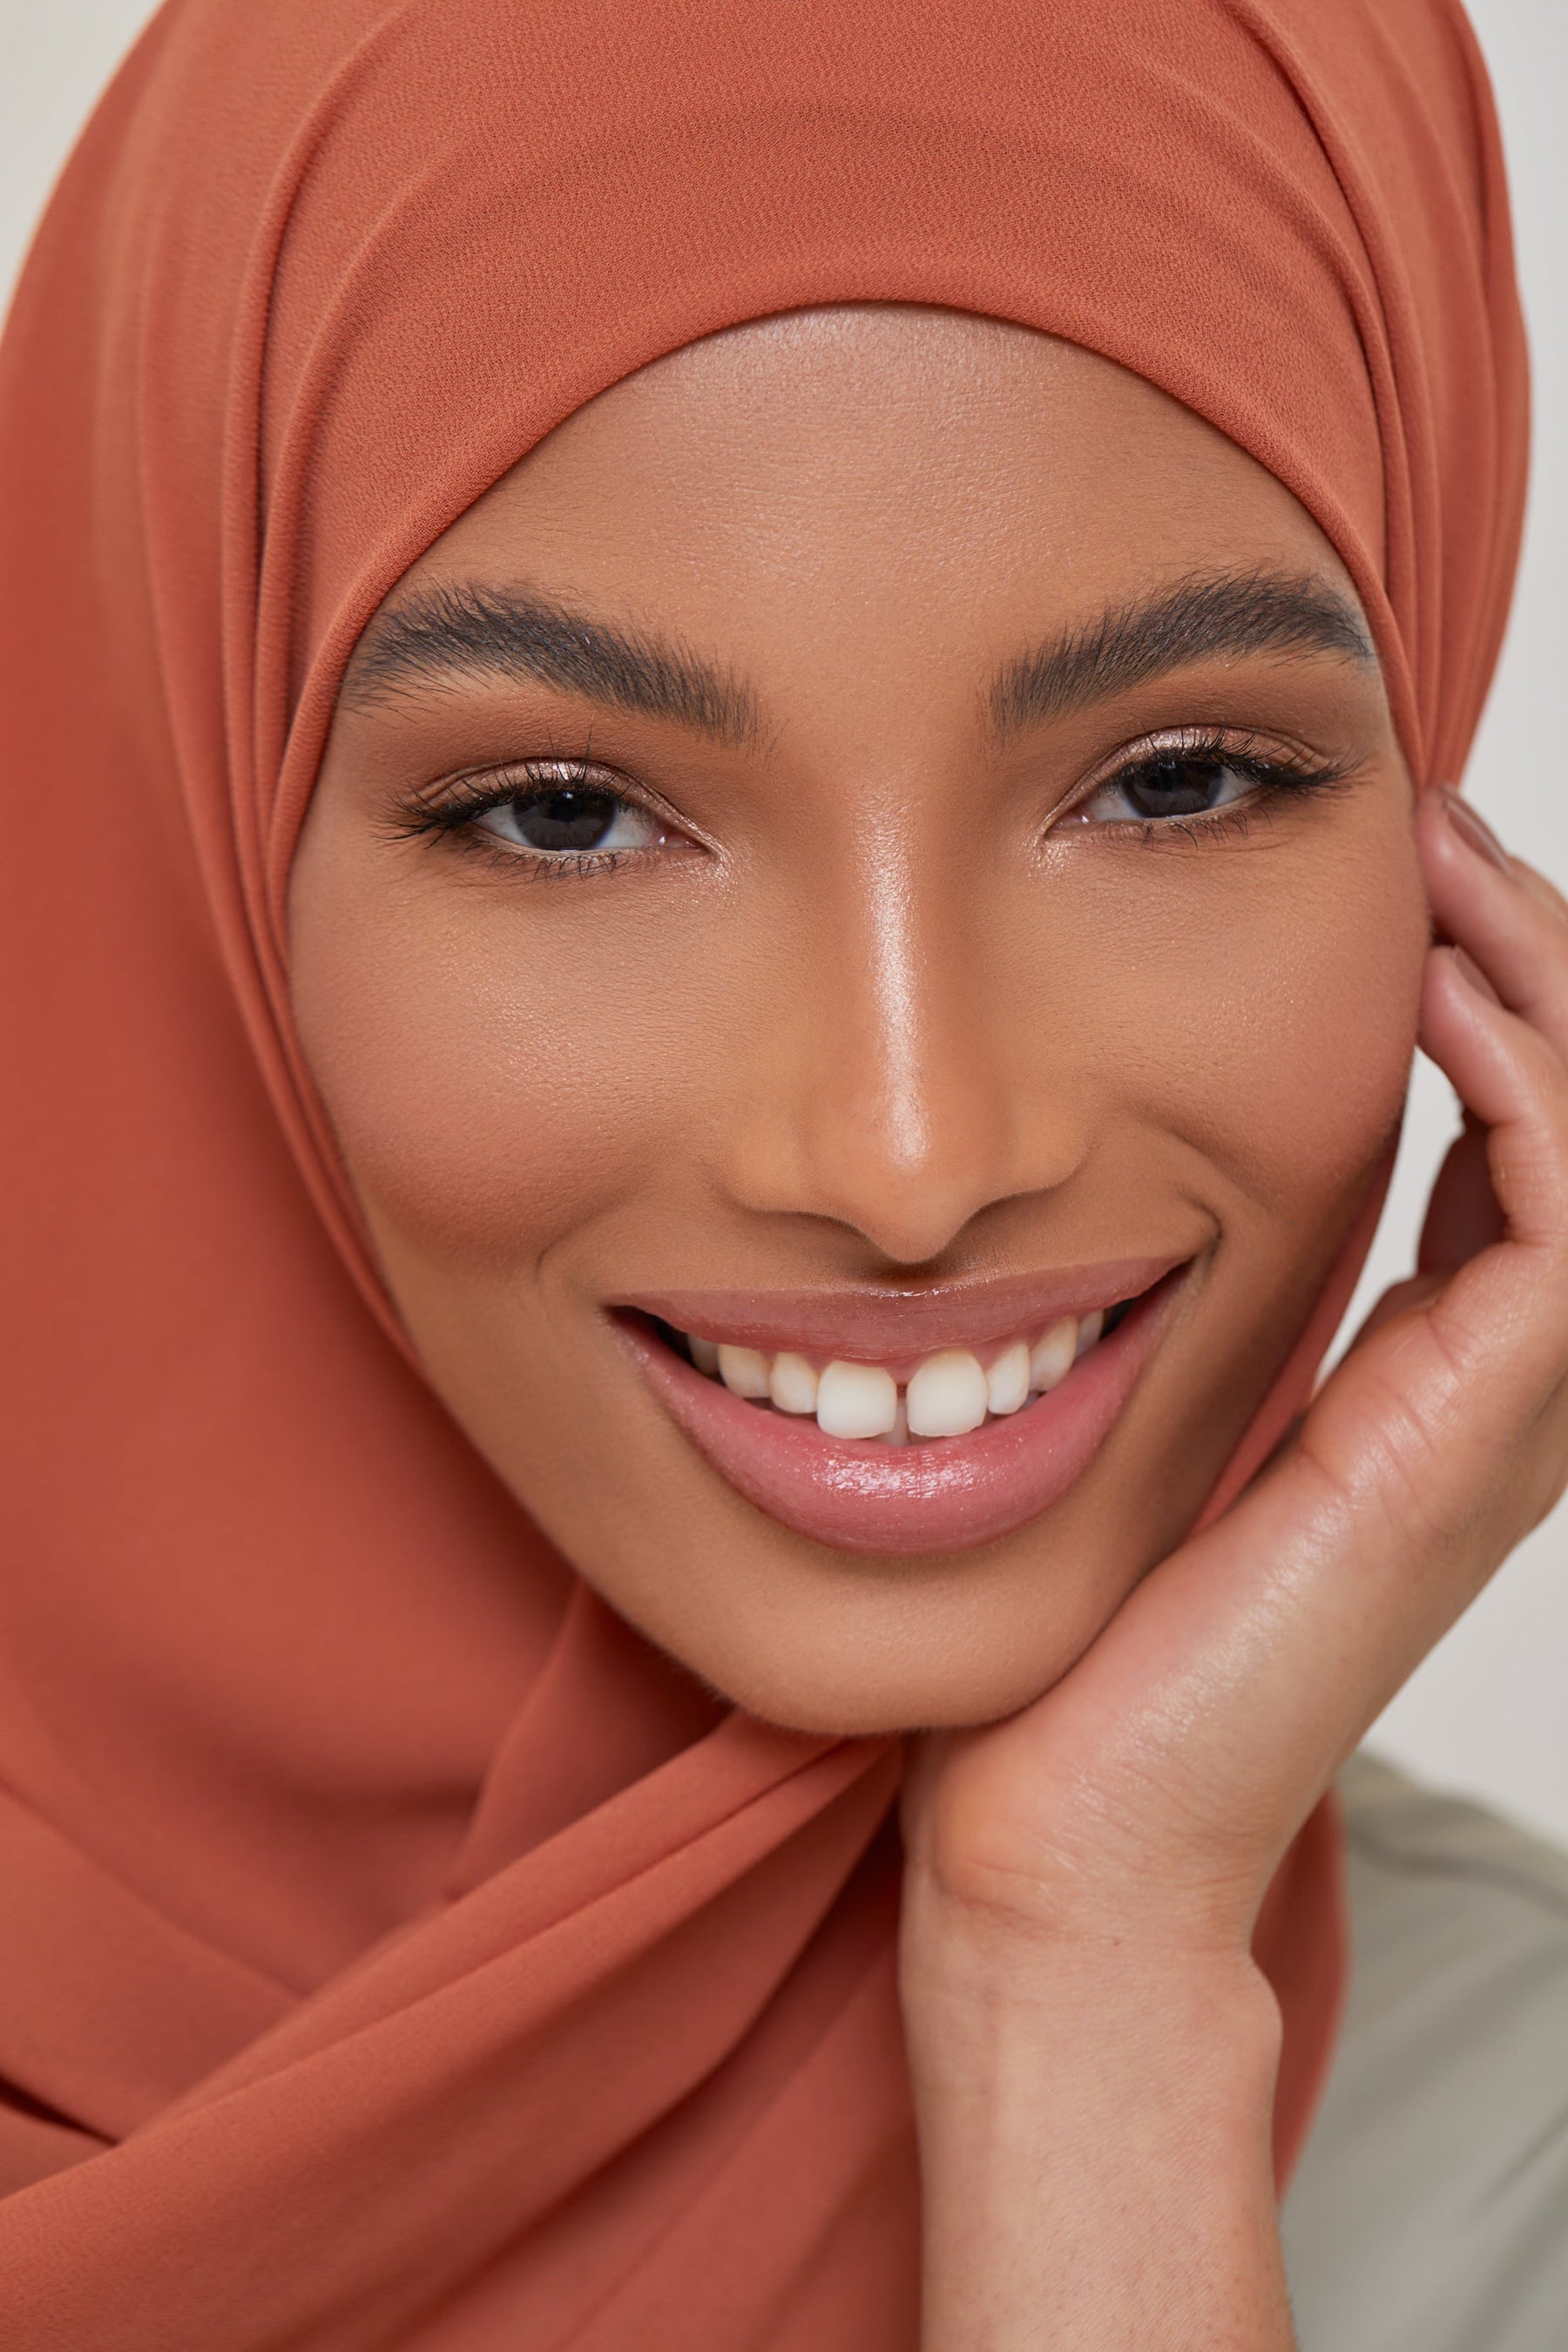 Essential Chiffon Hijab - Pumpkin Spice Scarves & Shawls Veiled Collection 